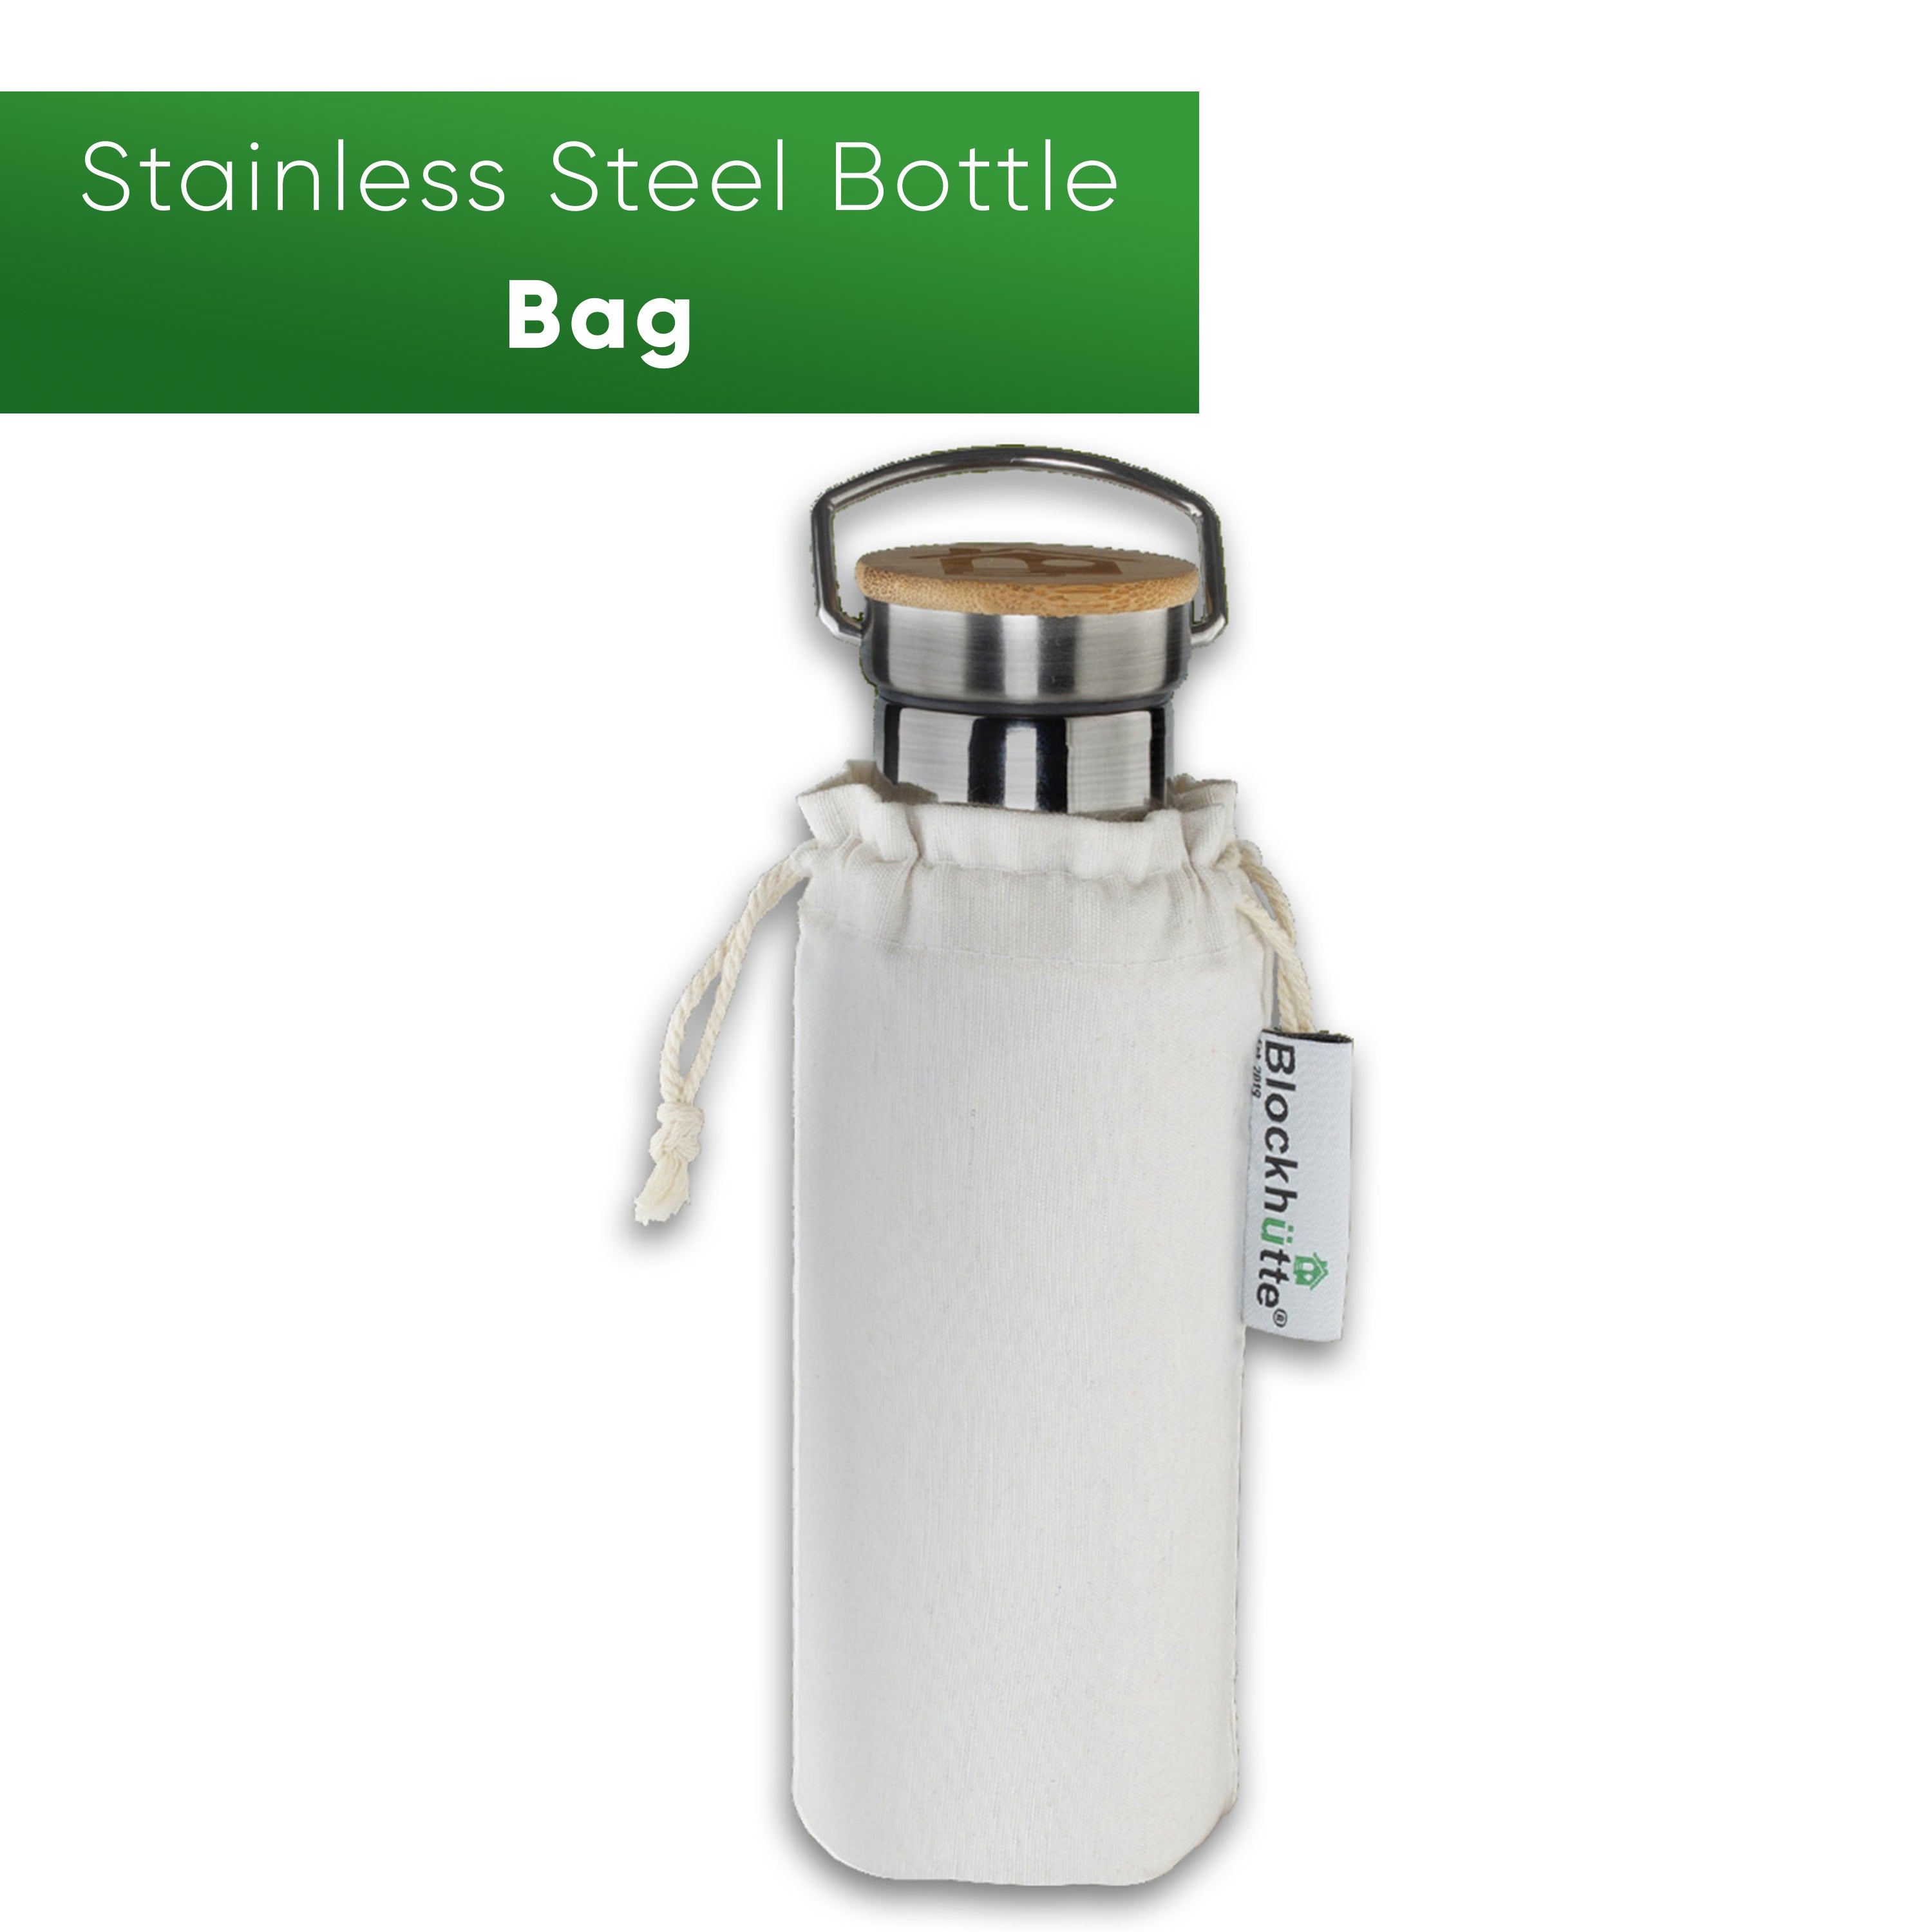 Stainless Steel Water Bottle - Bag